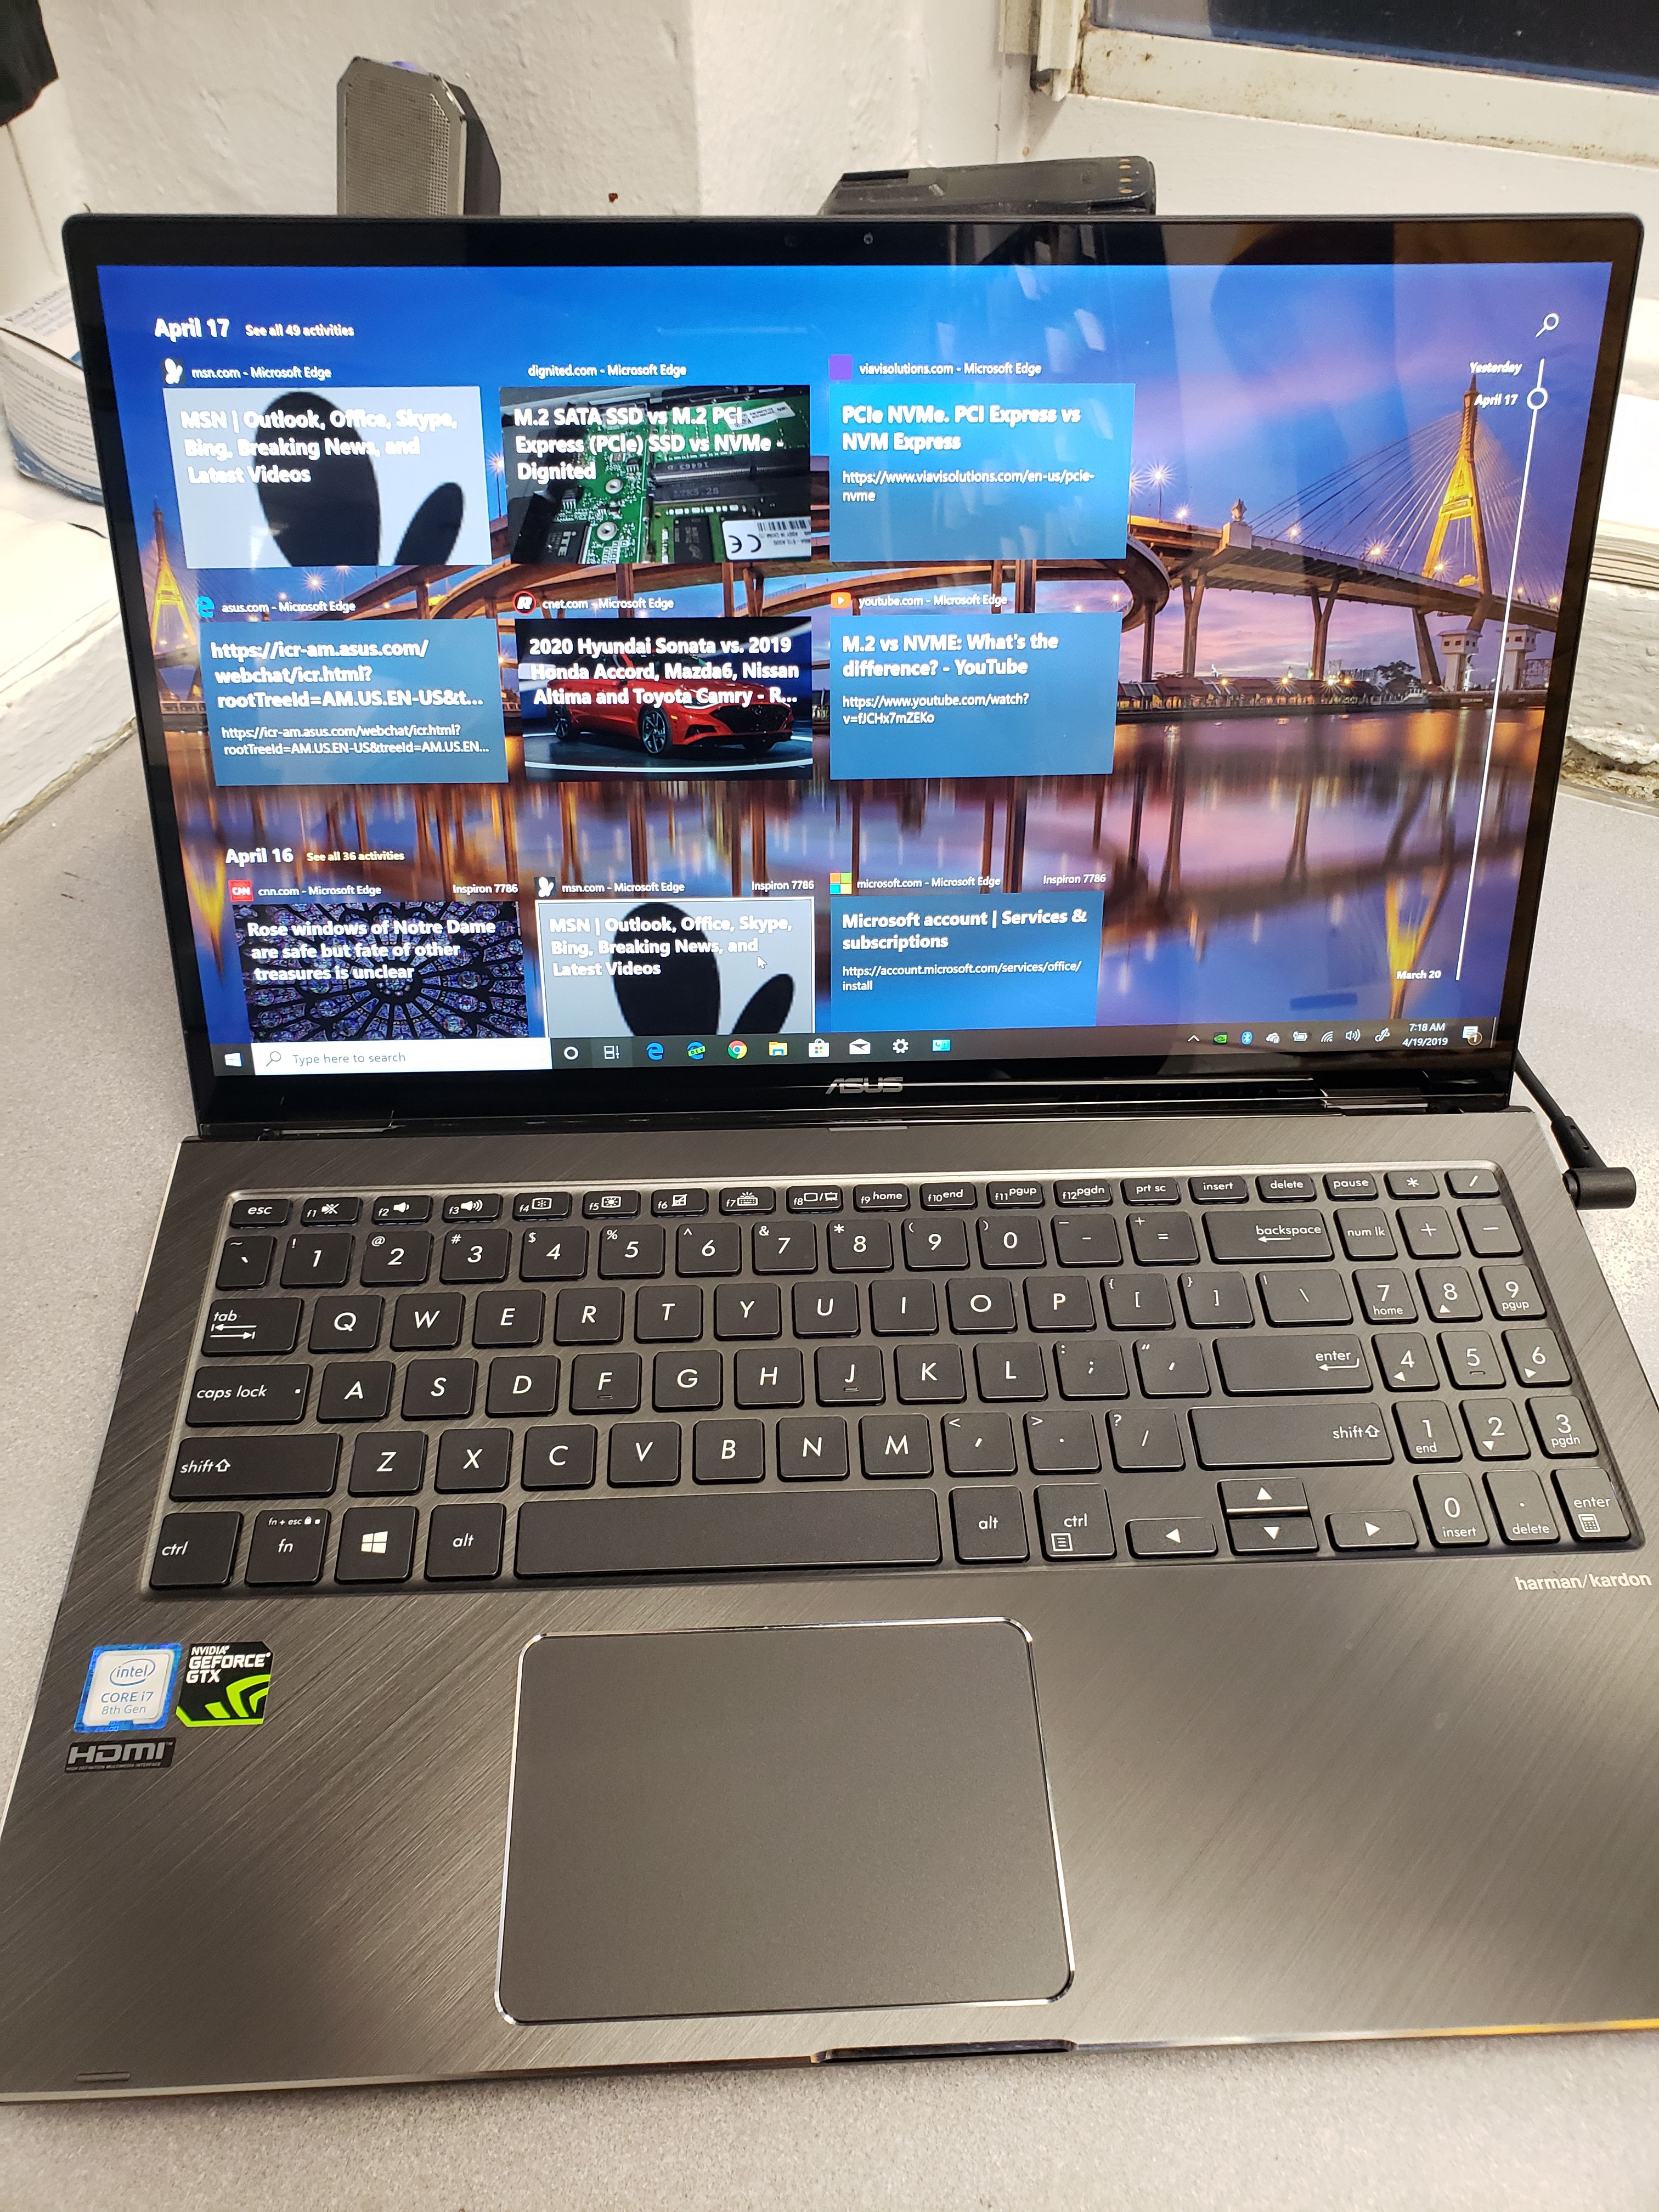 Asus Zenbook Laptop : Q536DF, 4K Touchscreen 2 in 1. 256Gb. SSD +2Tb. Hard Drive. Nvidia GTX 1050 Max-Q design!